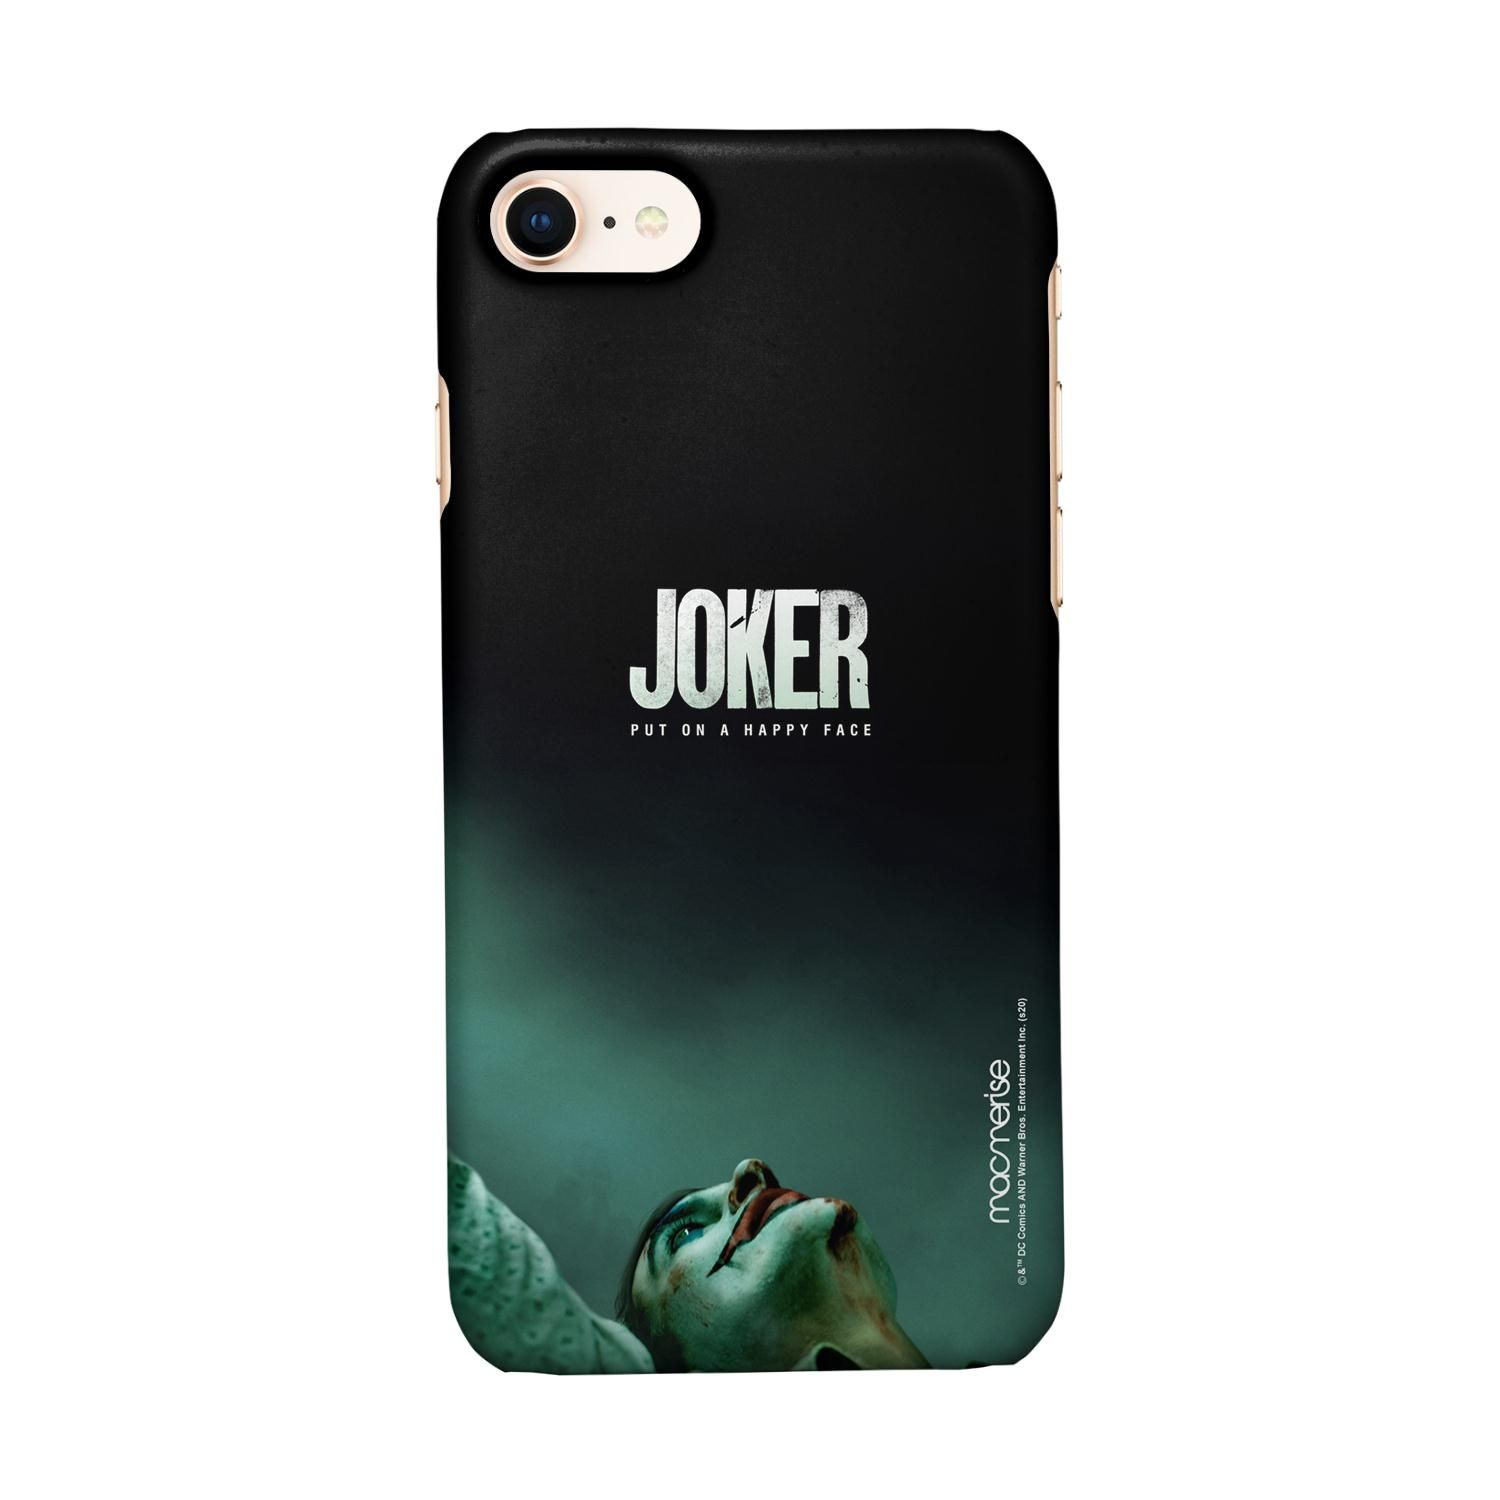 Buy Rise of the Joker - Sleek Phone Case for iPhone 8 Online